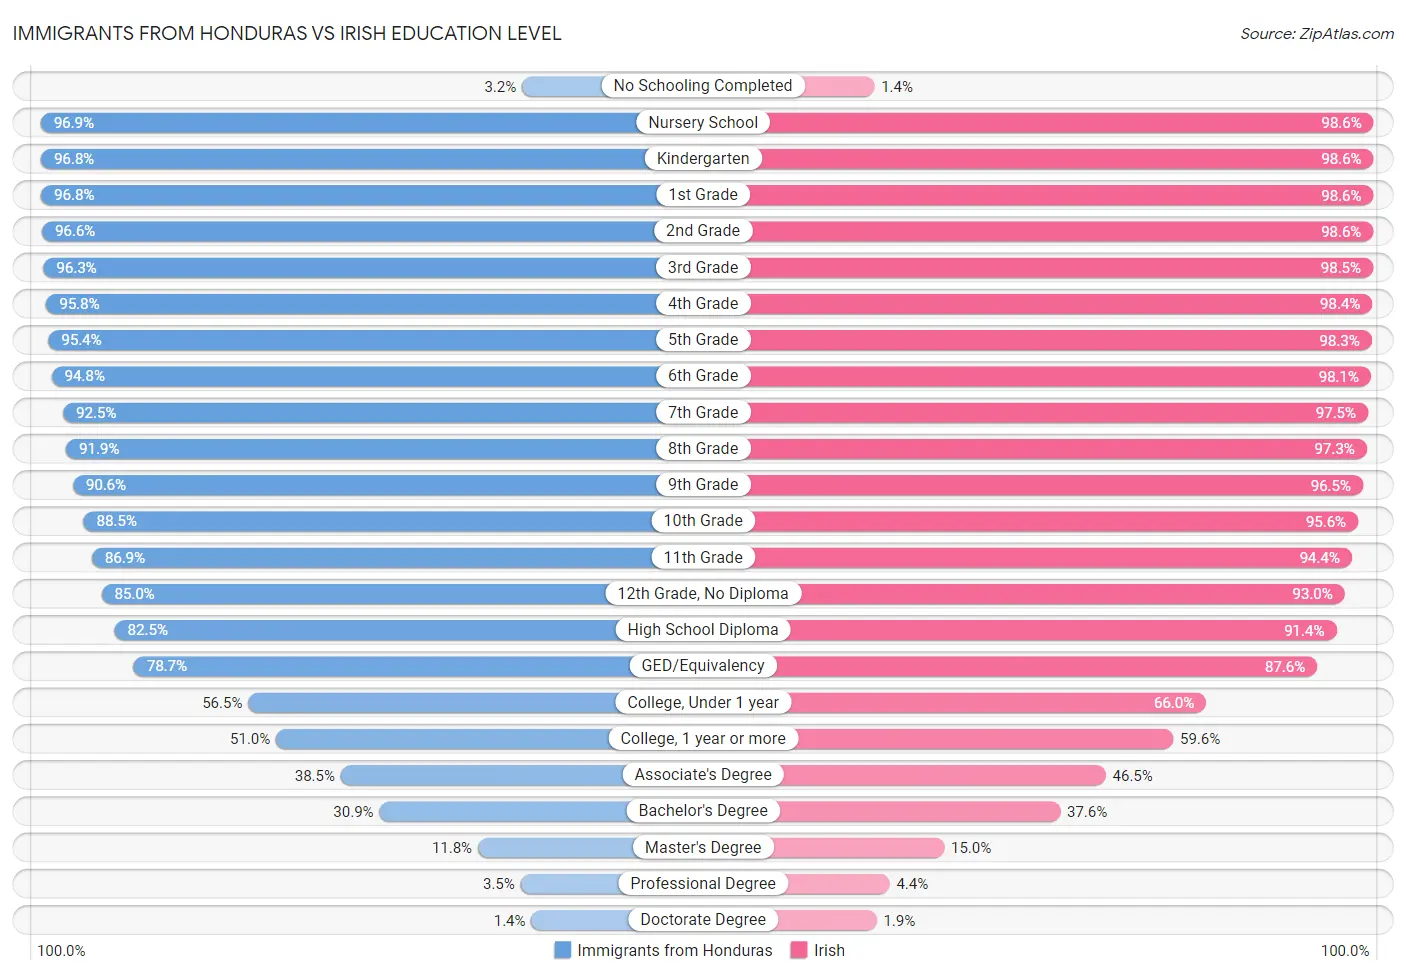 Immigrants from Honduras vs Irish Education Level